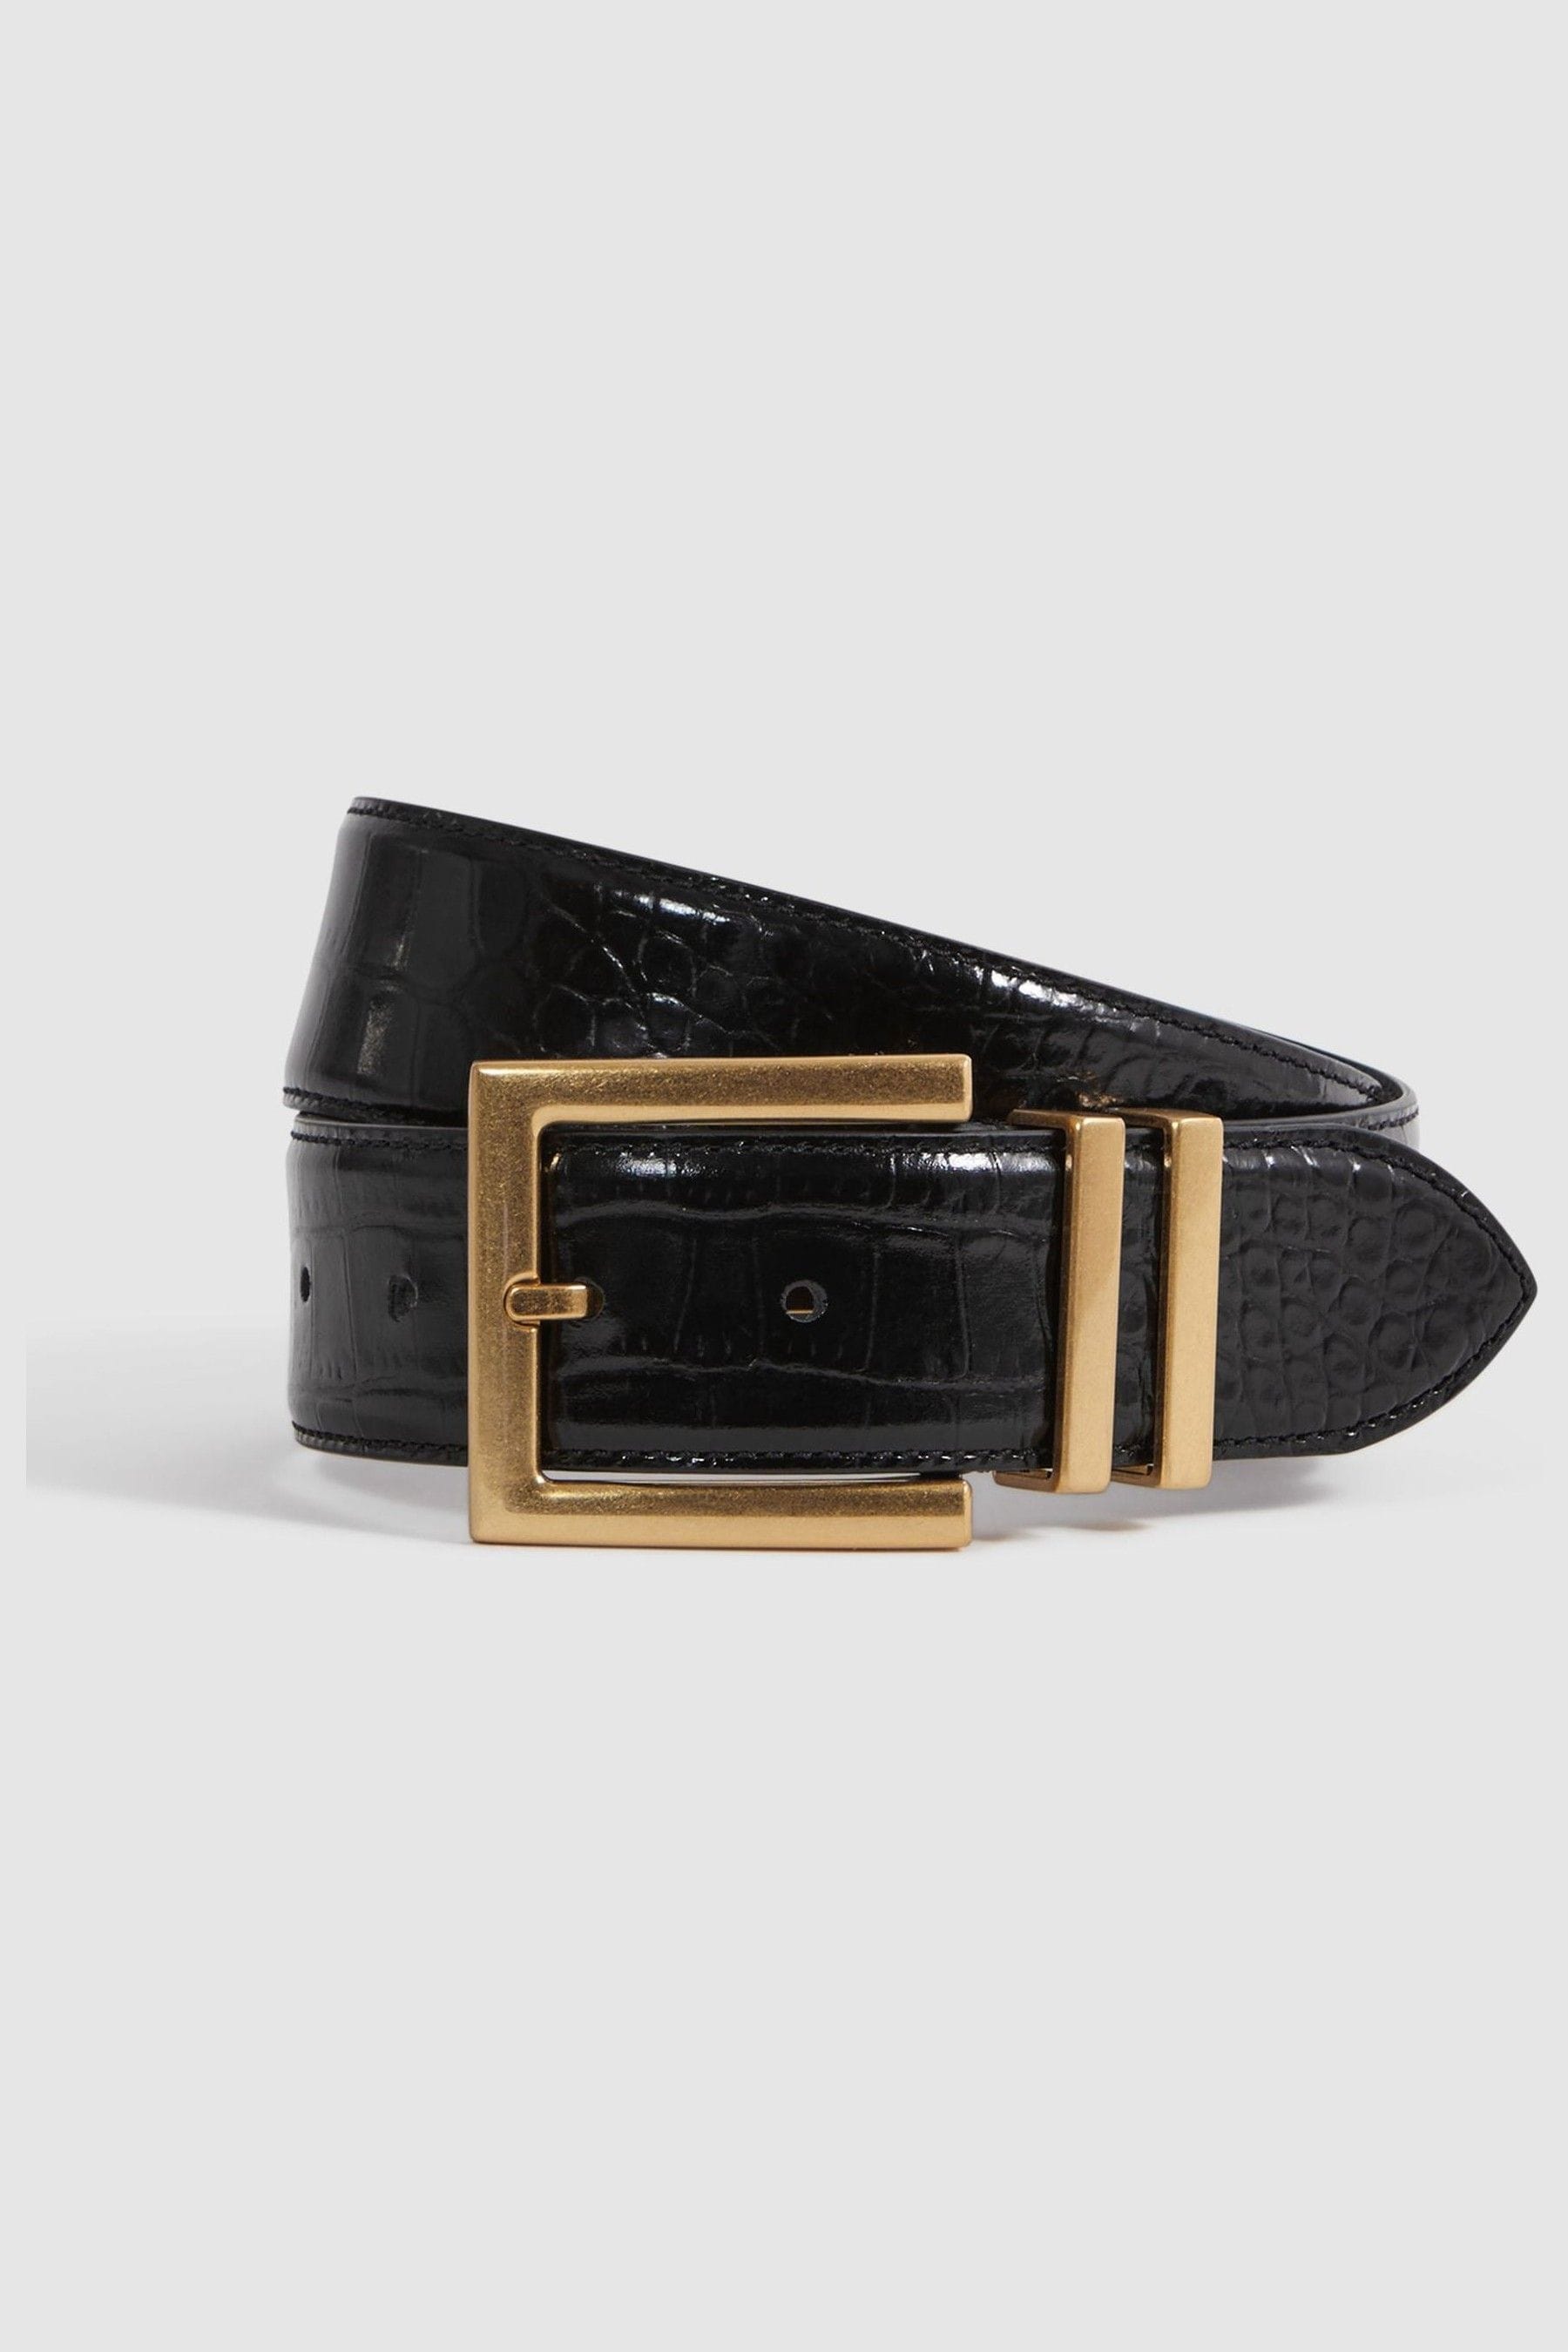 Reiss Brompton - Black Patent Leather Crocodile Design Belt, S